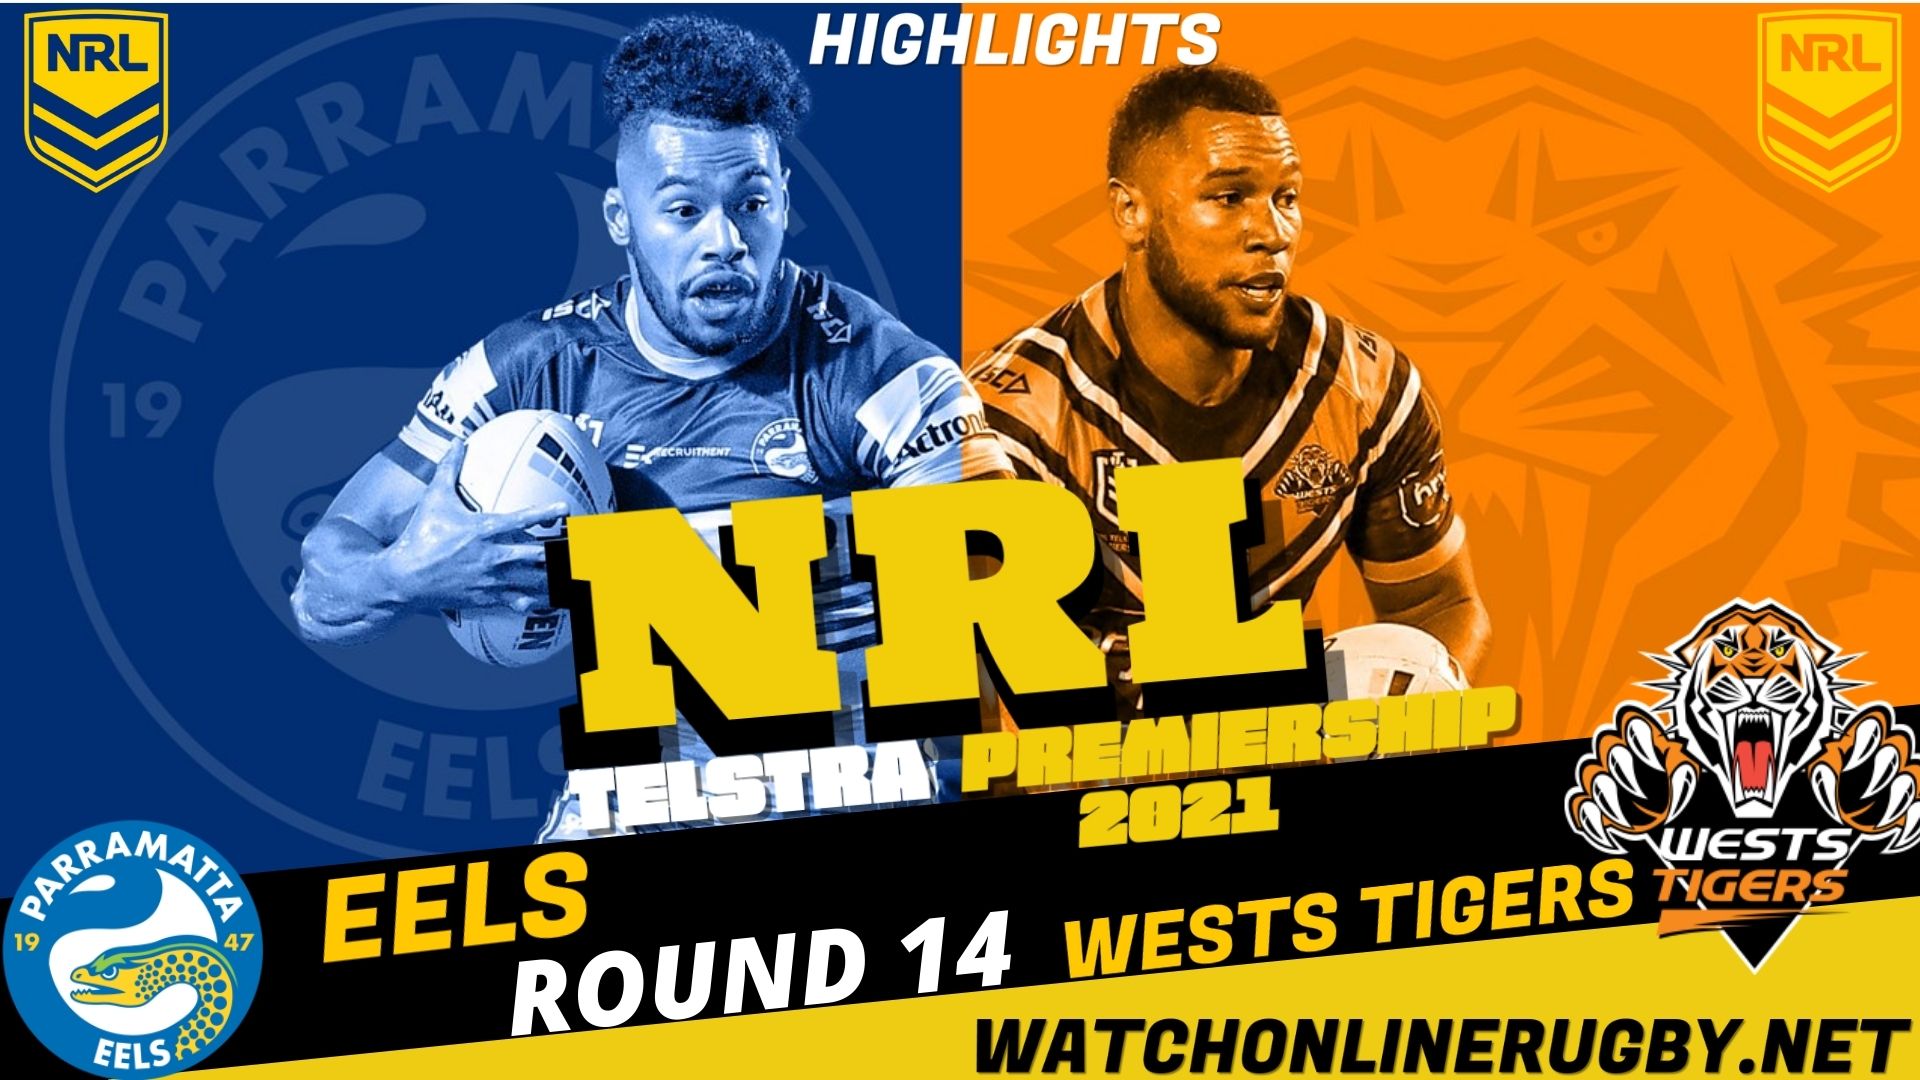 Eels Vs Wests Tigers Highlights RD 14 NRL Rugby